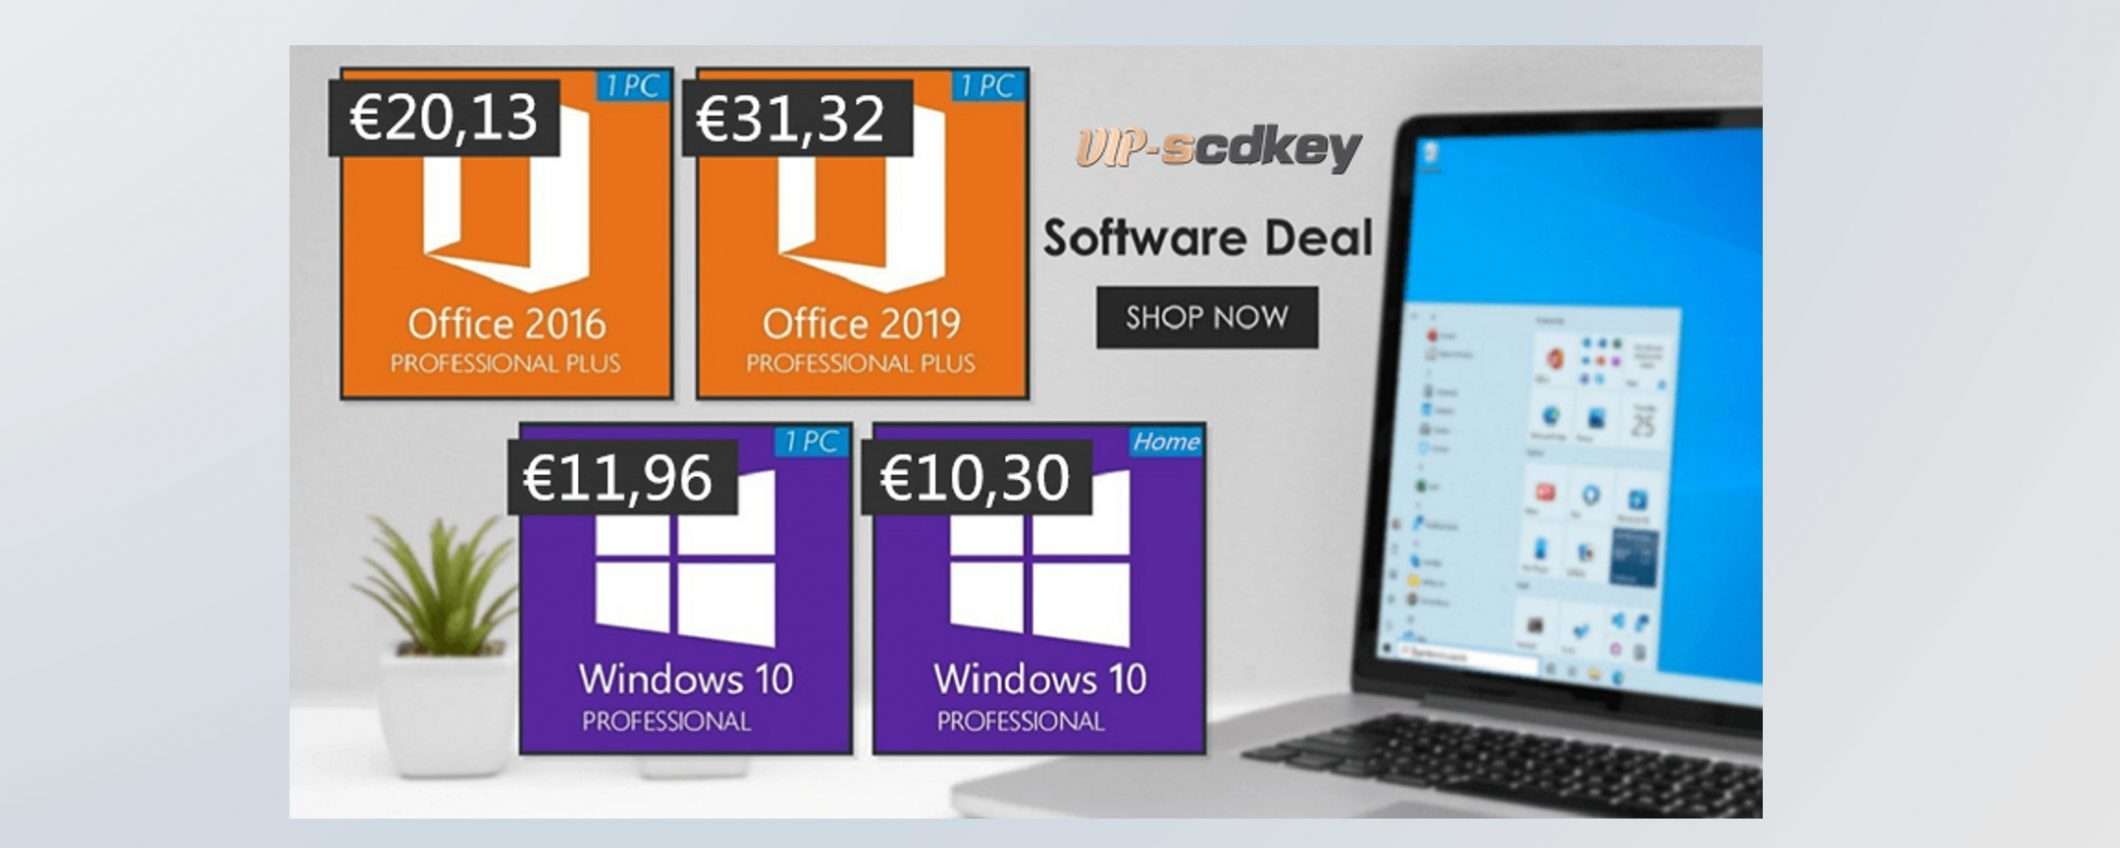 Sconti VIP-SCDkey: Windows 10 PRO OEM key solo 11€